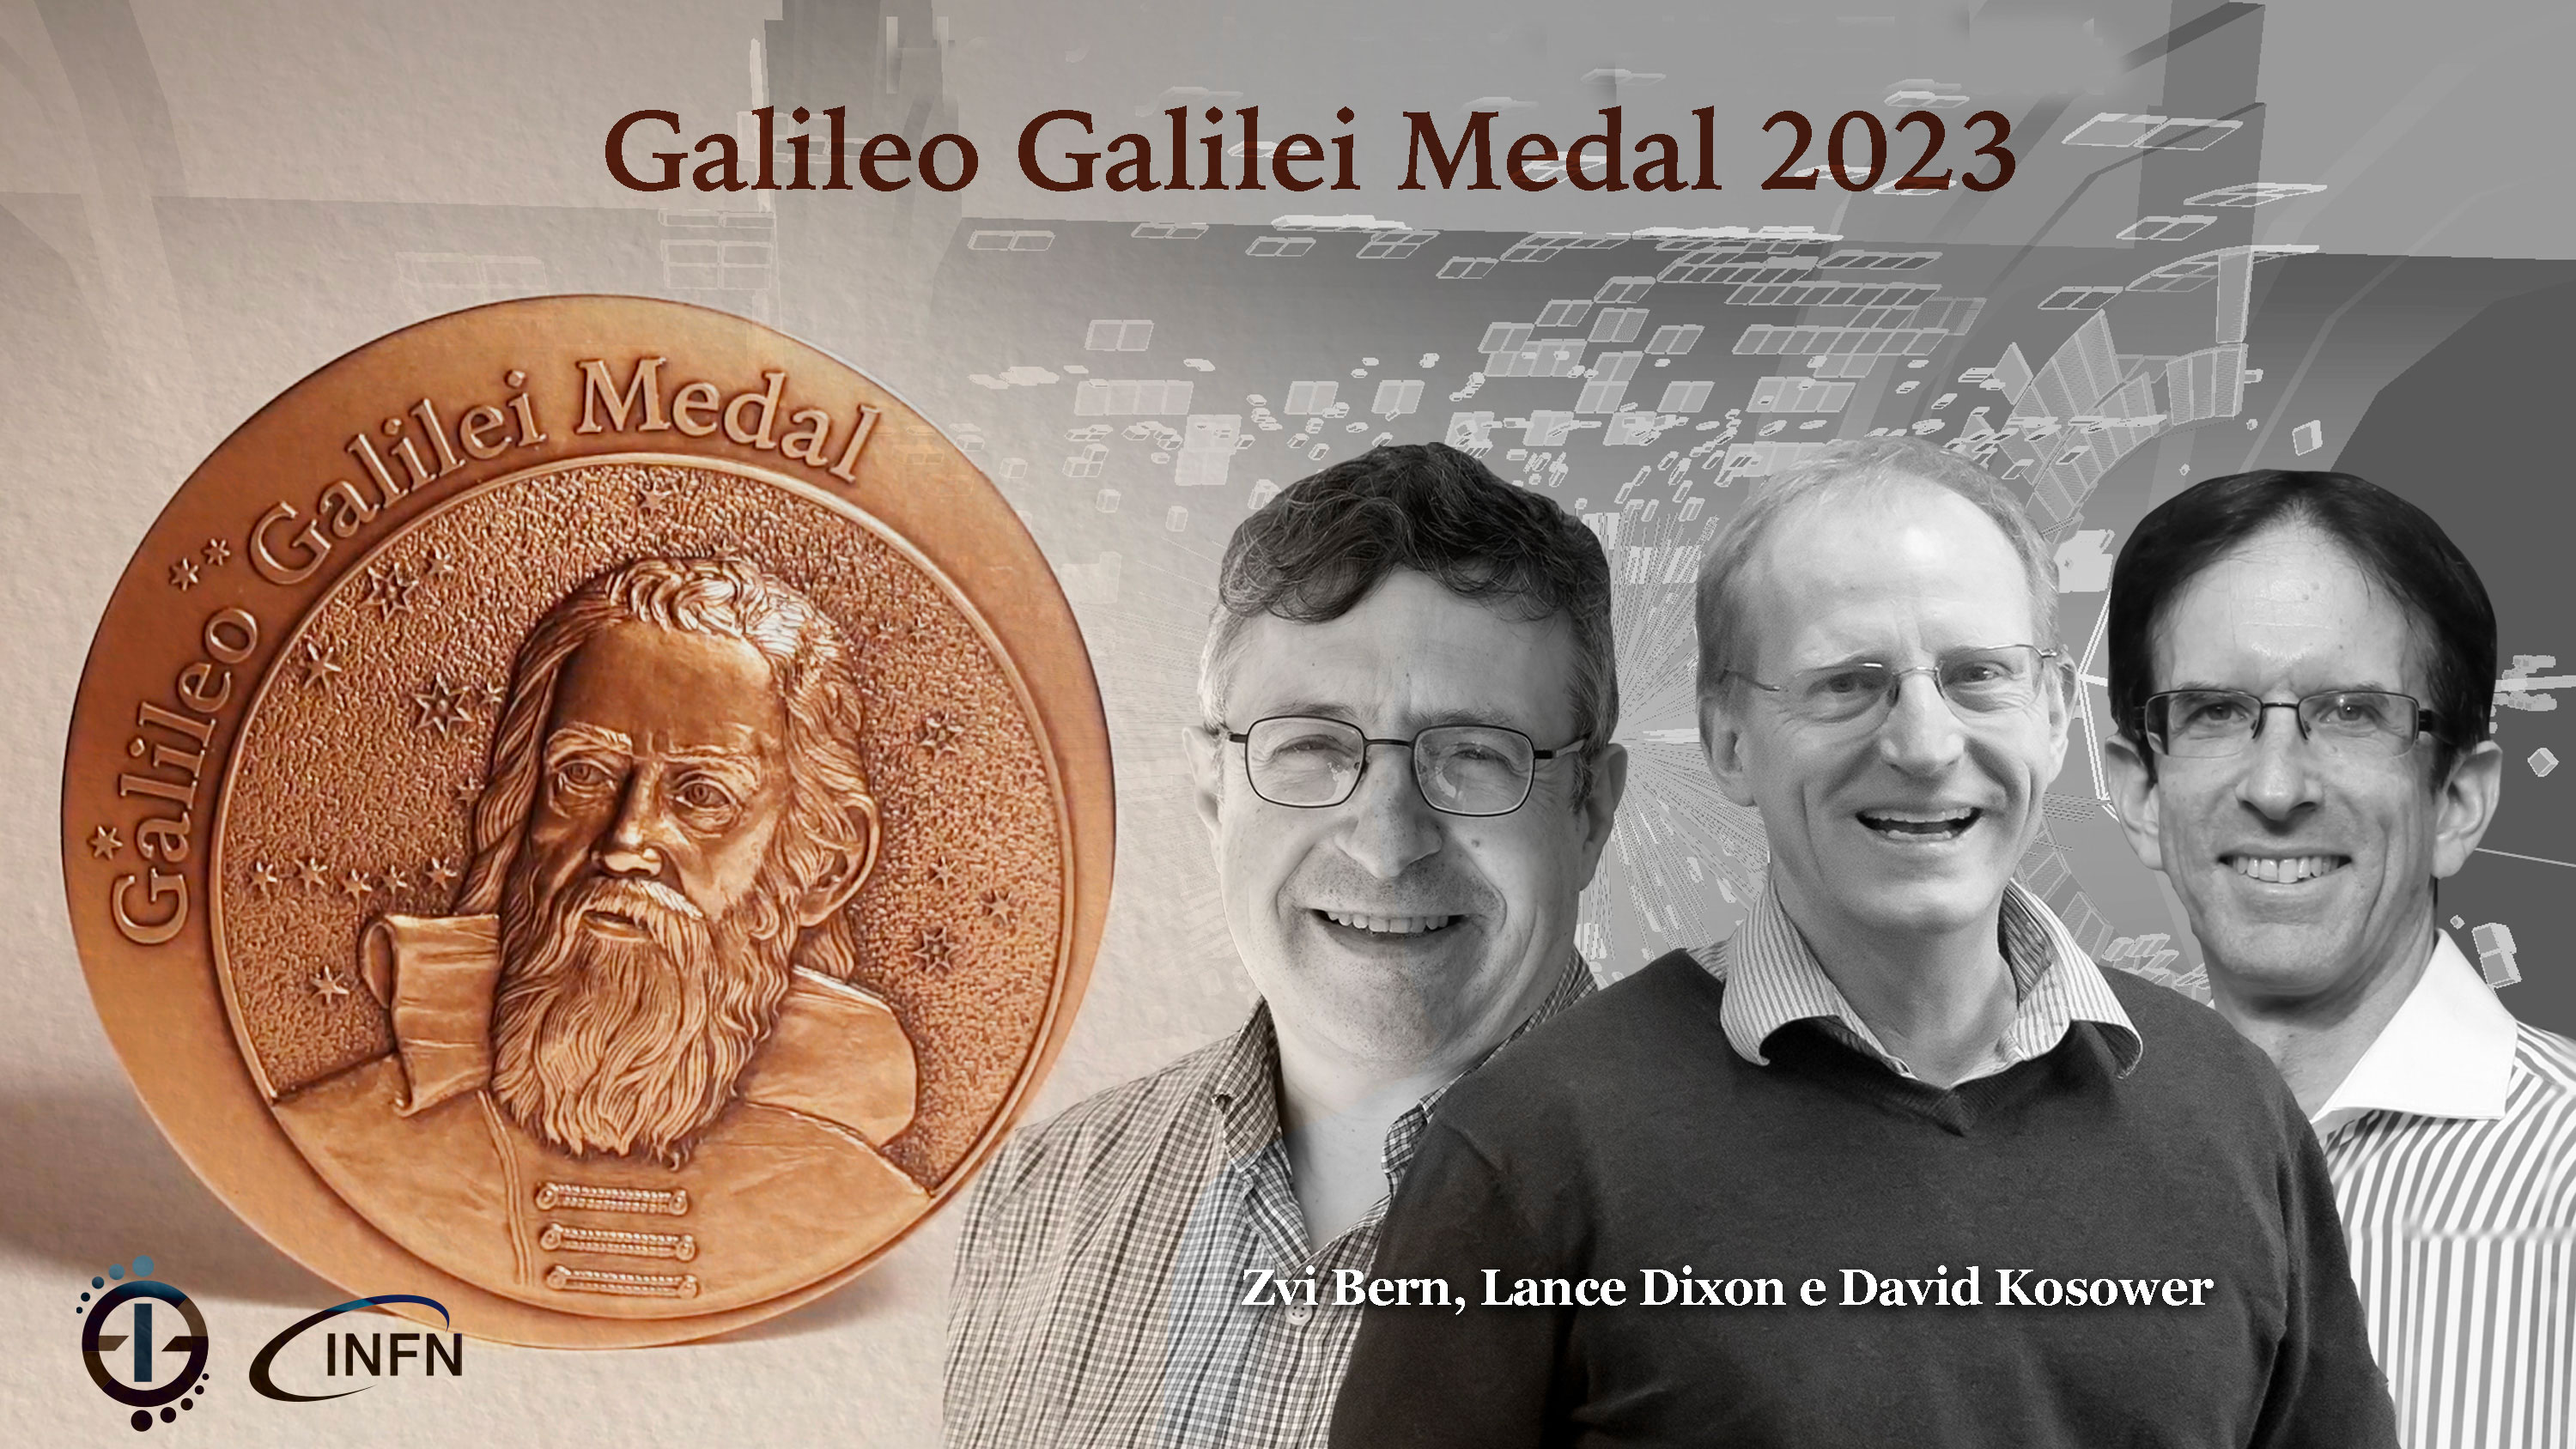 THE 2023 GALILEO GALILEI MEDAL GOES TO ZVI BERN, LANCE…